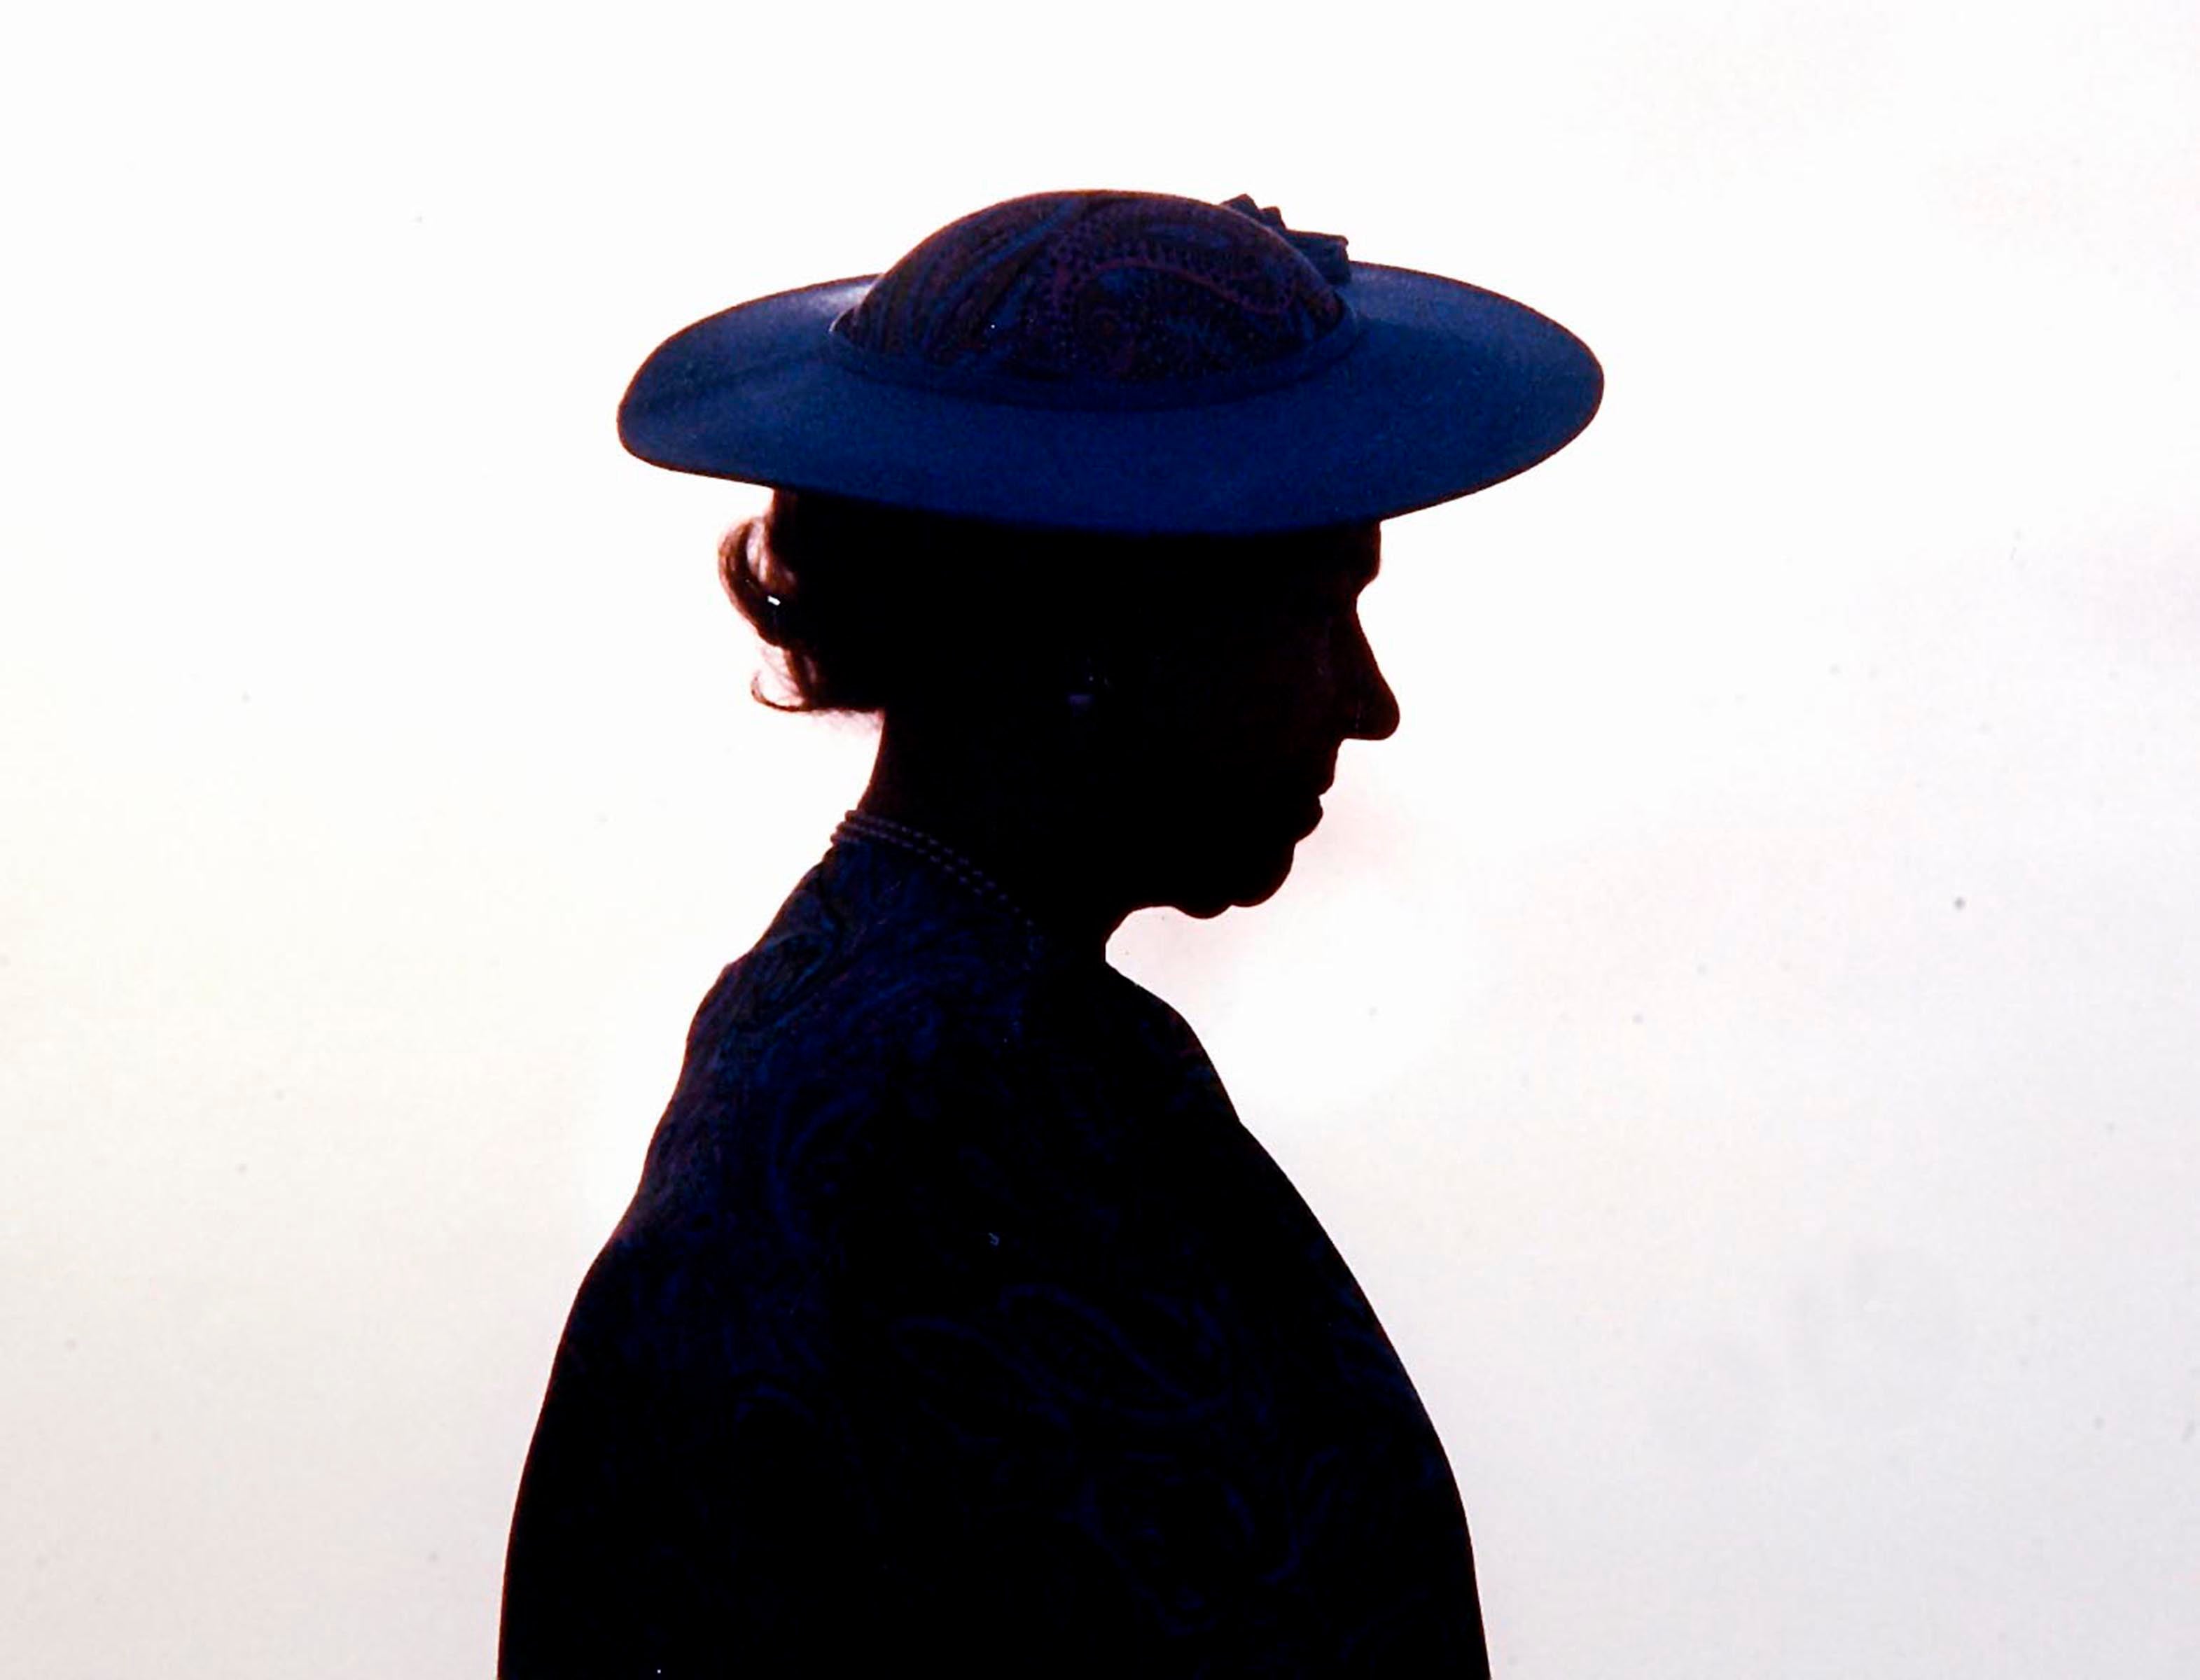 Britain’s Queen Elizabeth II silhouetted during welcoming ceremonies in Barbados in 1989